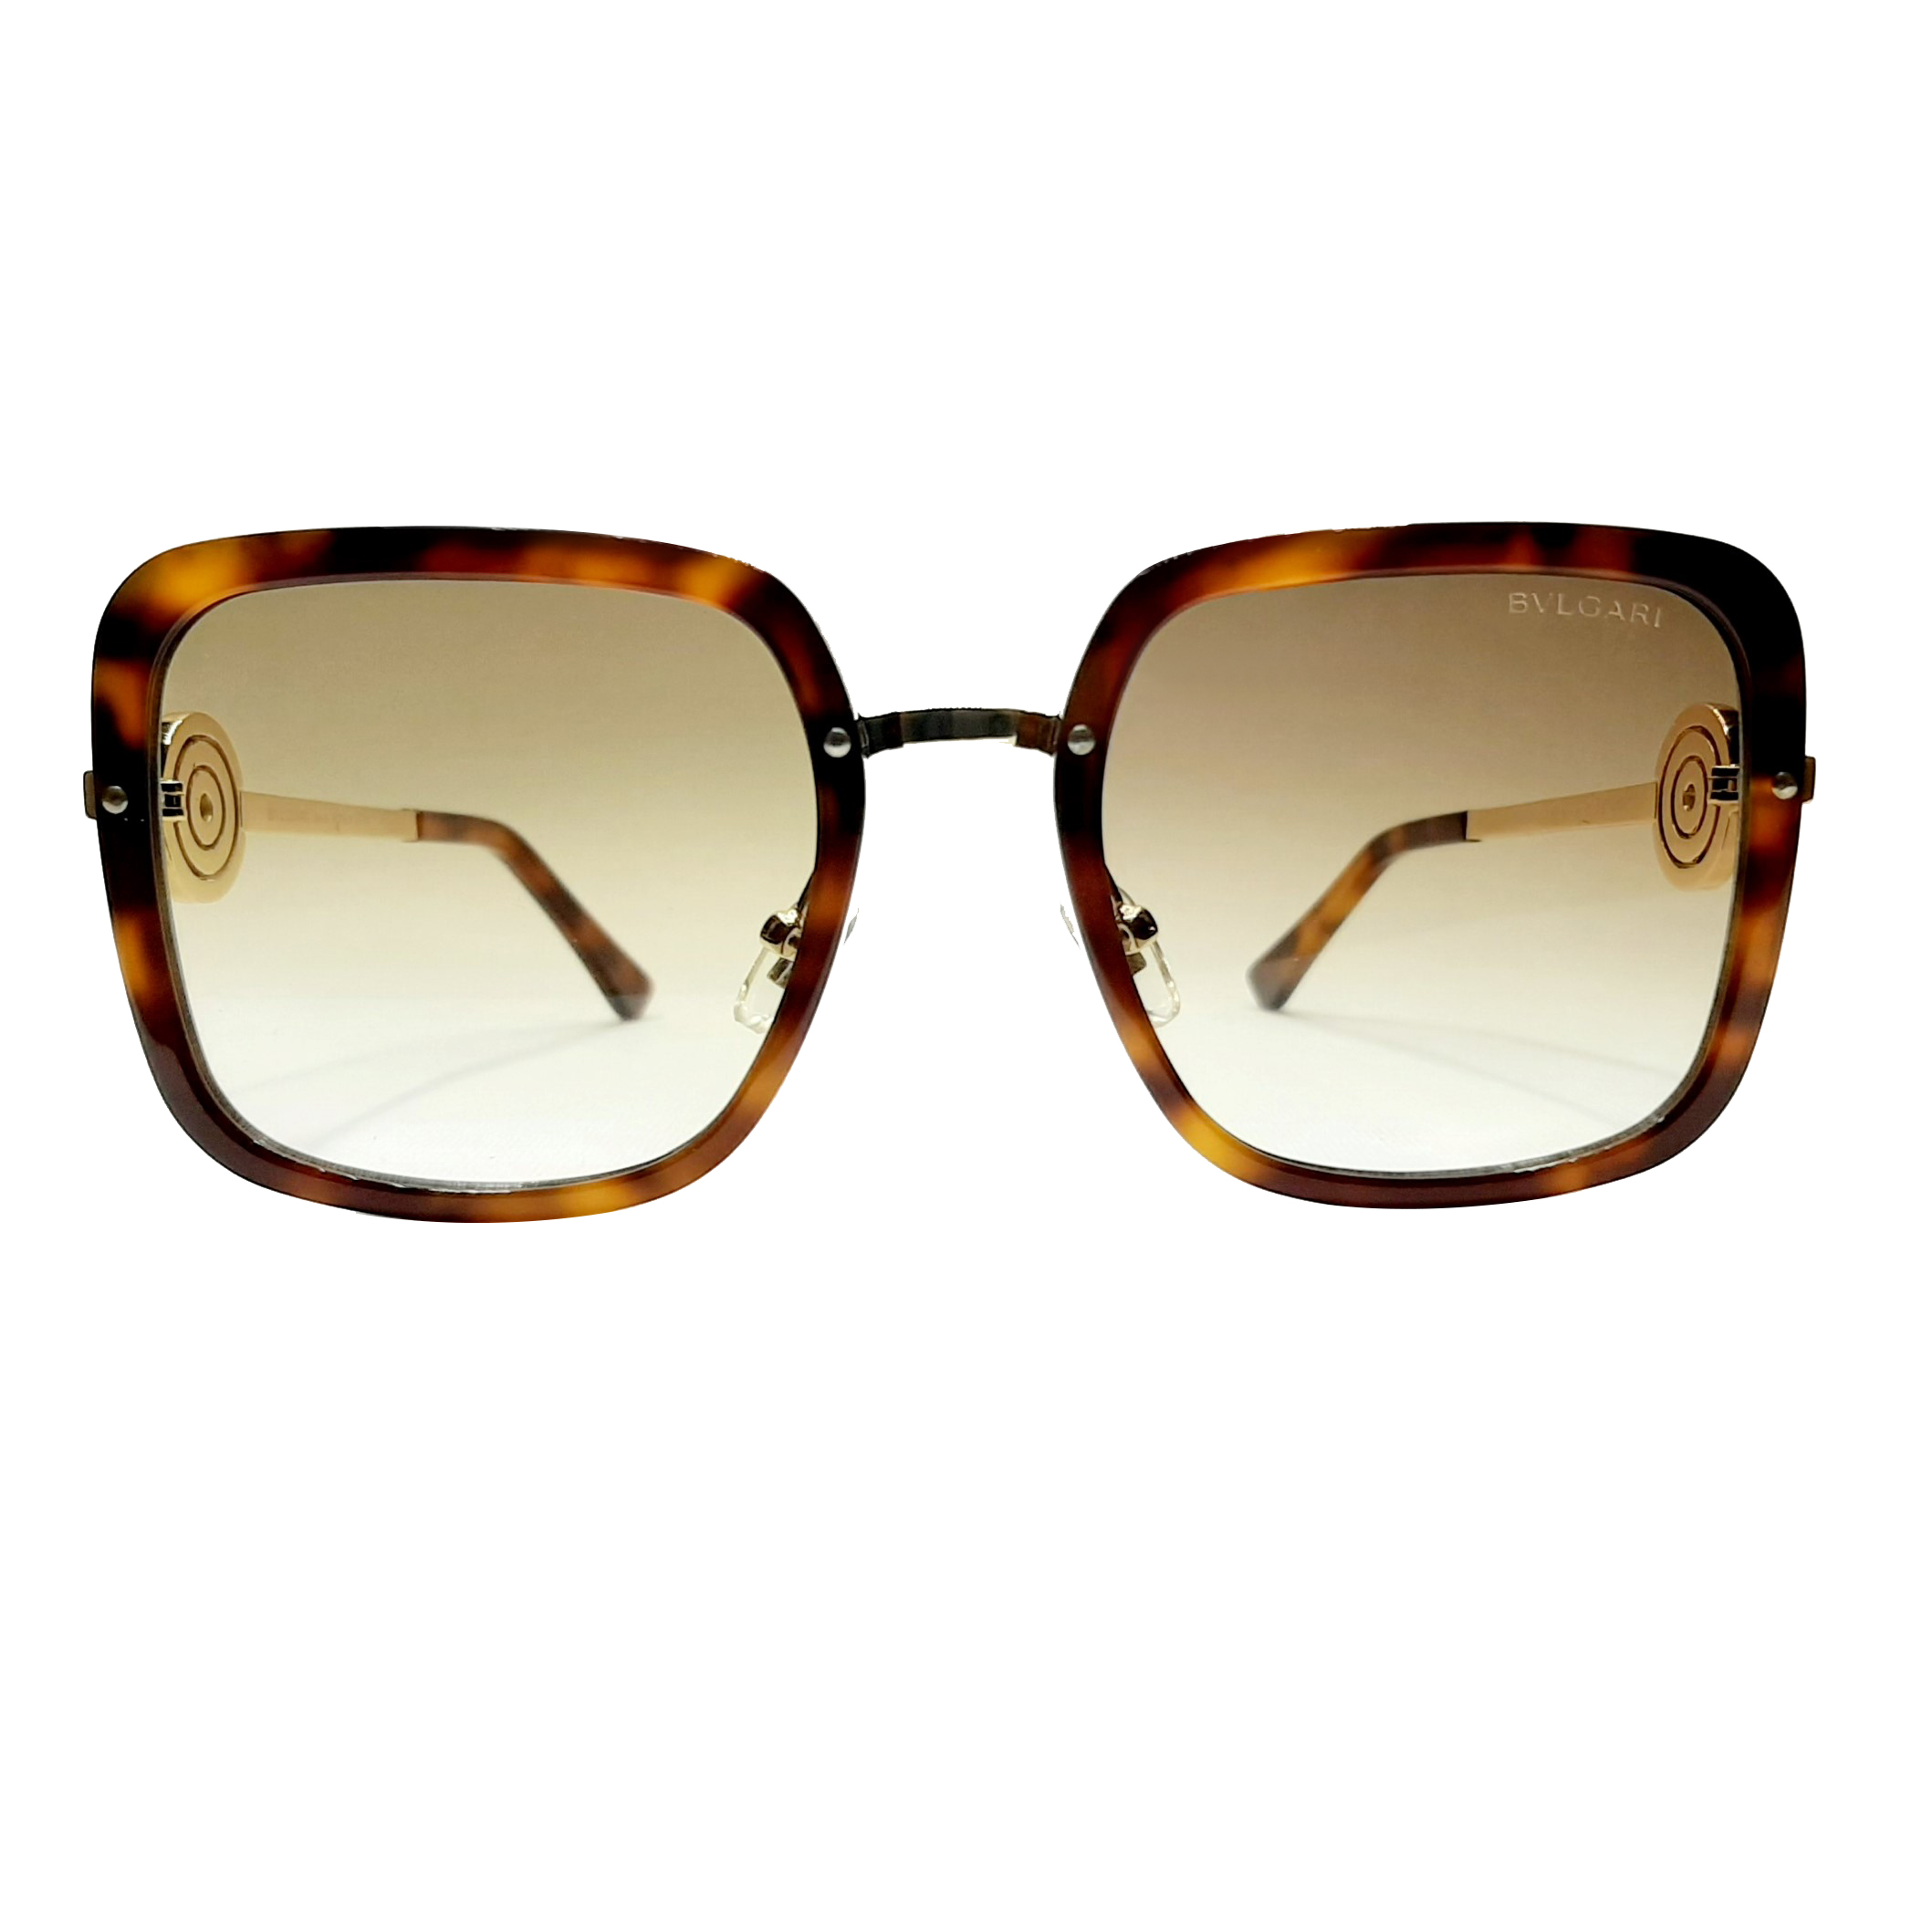 عینک آفتابی زنانه بولگاری مدل BV9568B54628d